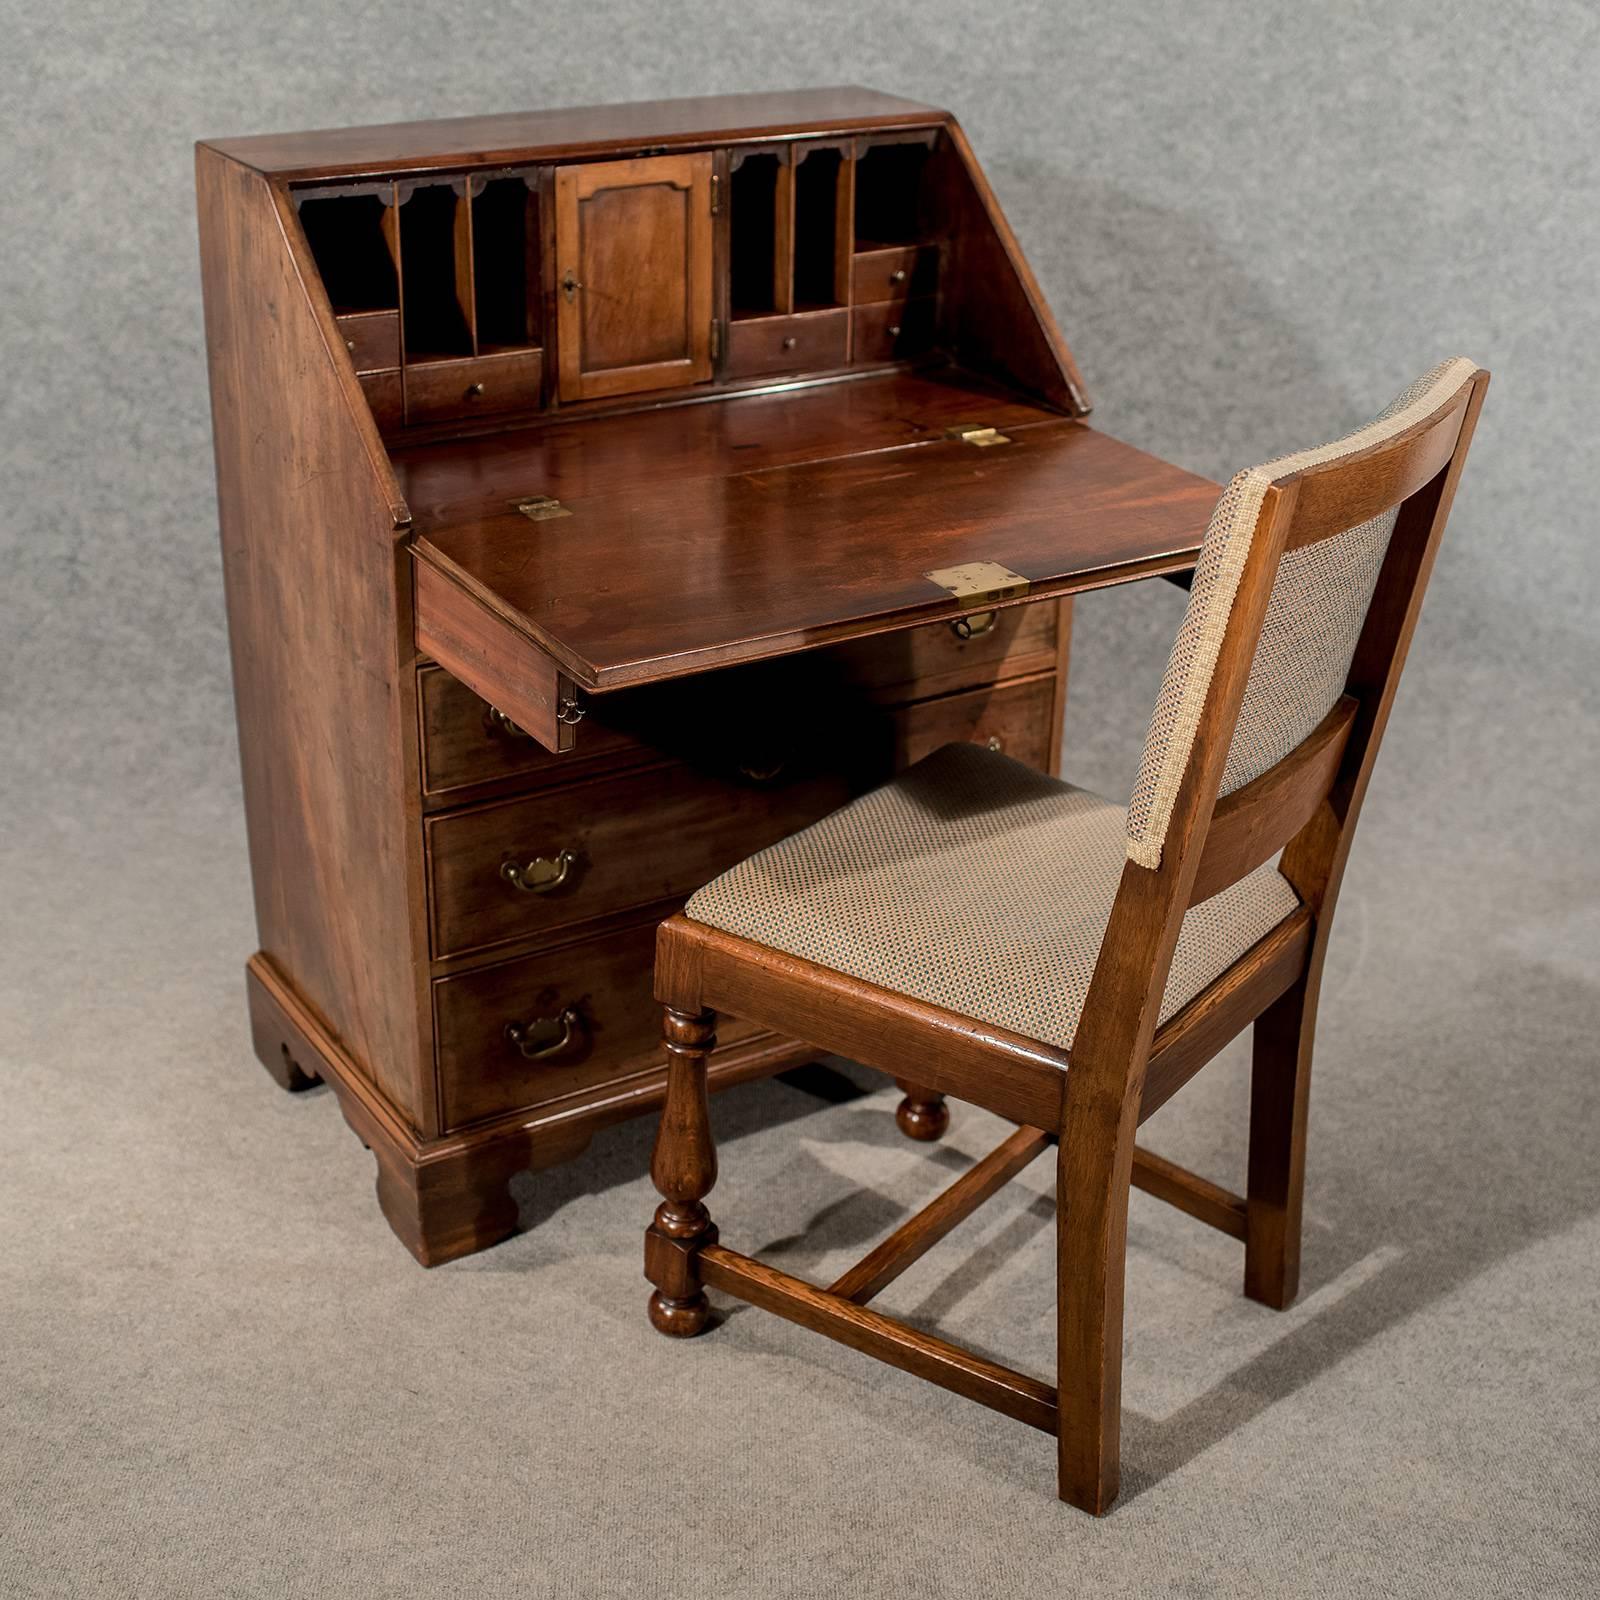 Great Britain (UK) Antique Writing Desk Bureau Chest English Georgian Mahogany Quality, circa 1800